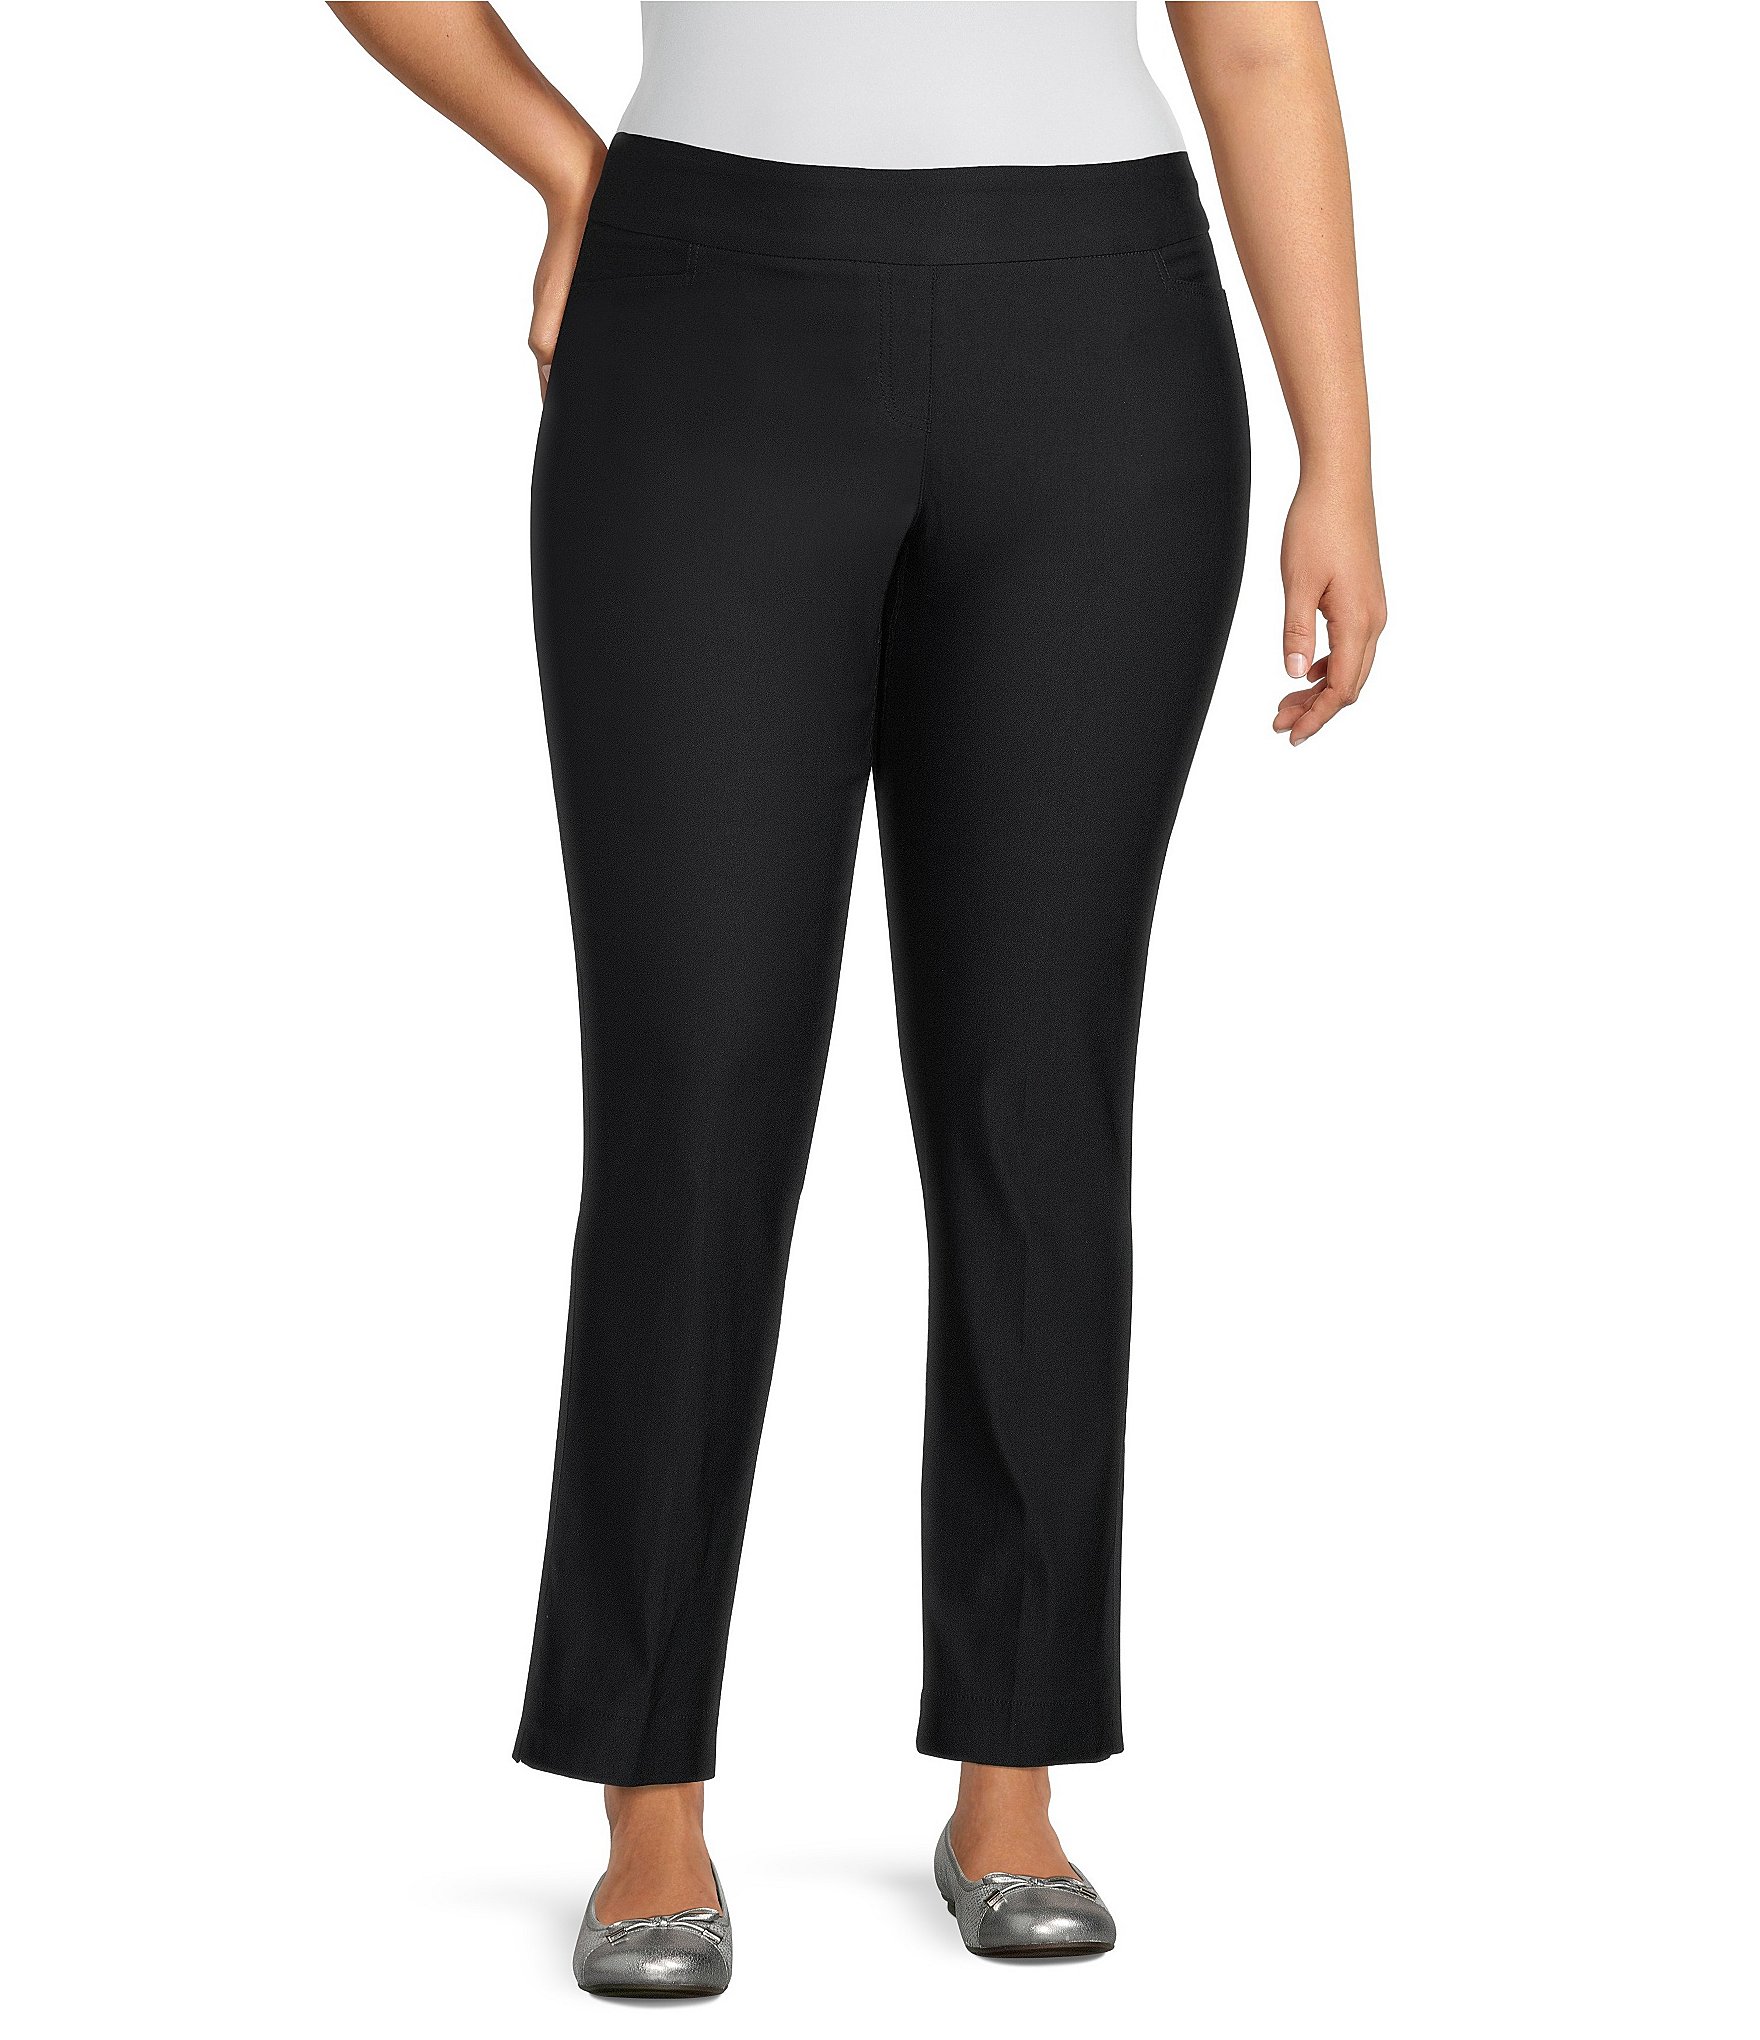 Women's Black Trousers, Capris & Shorts – Slimsation By Multiples